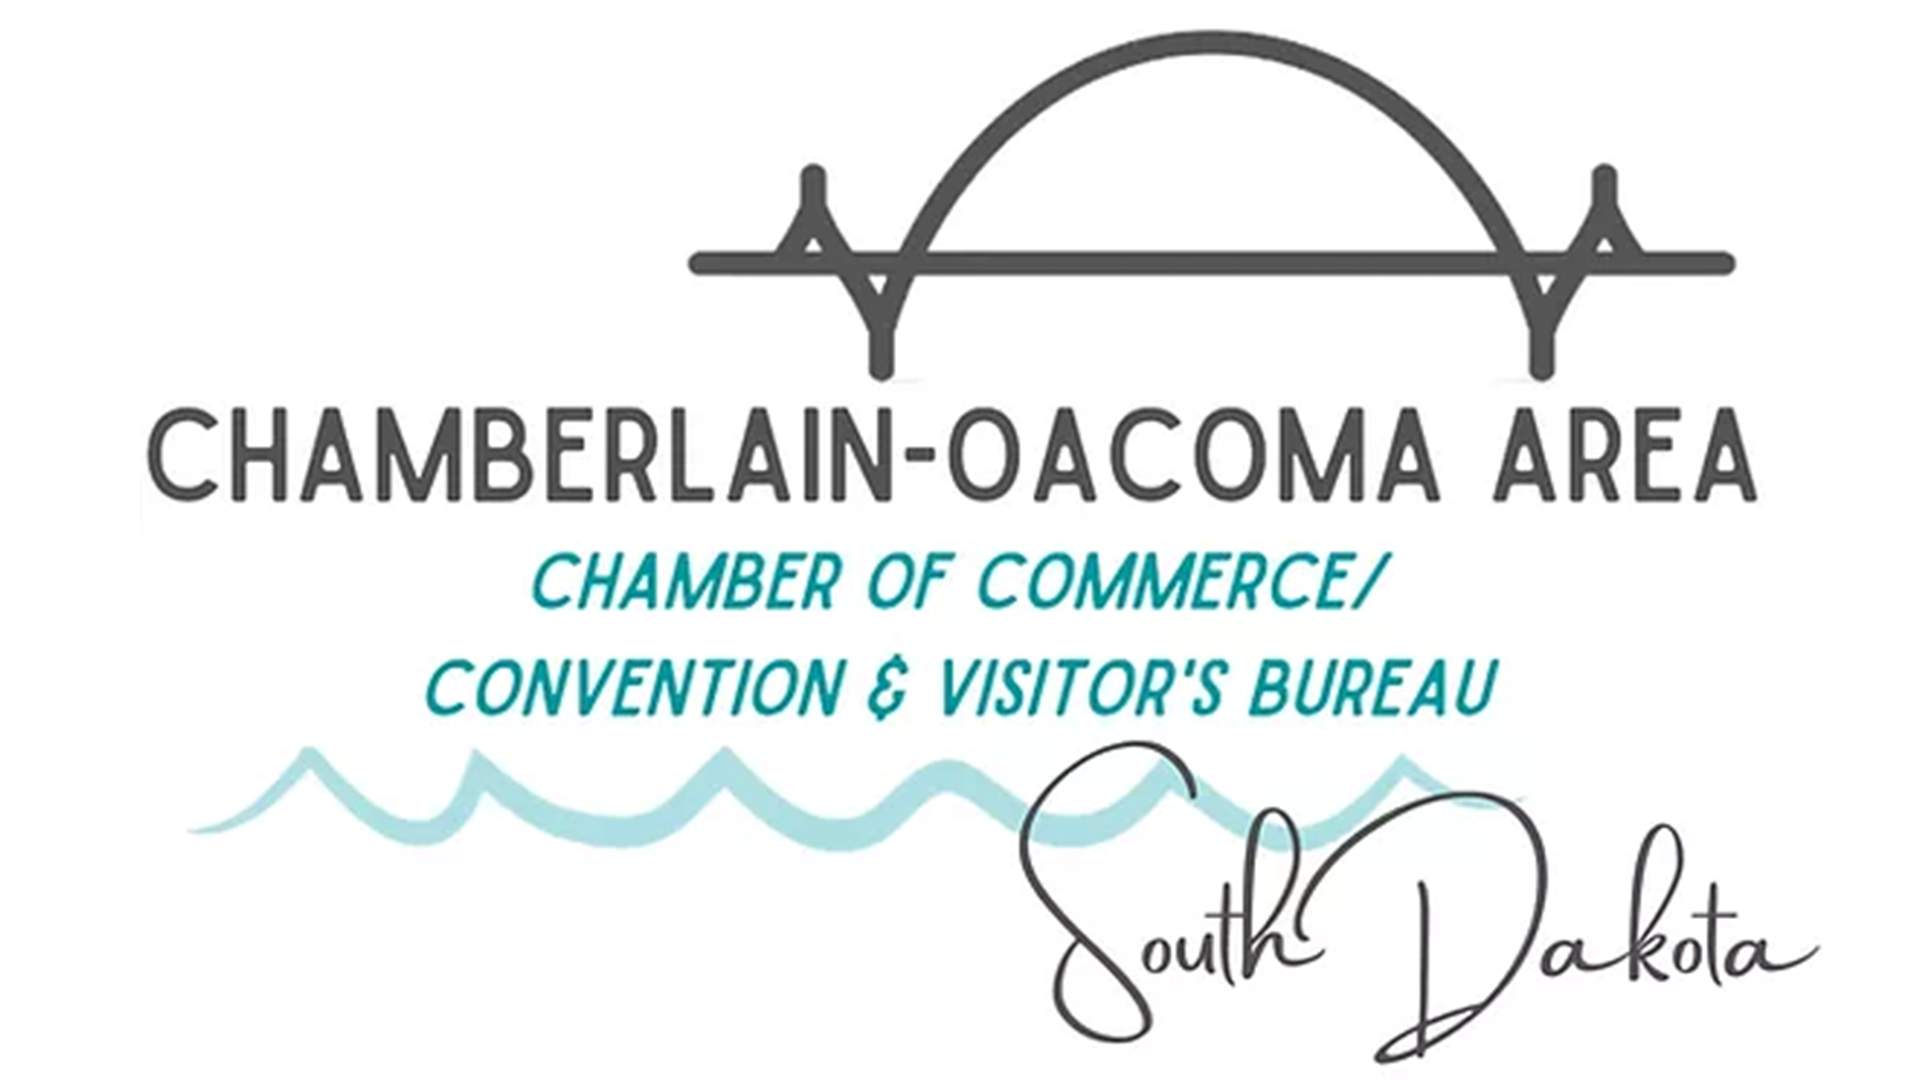 Chamberlain Oacoma Chamber logo